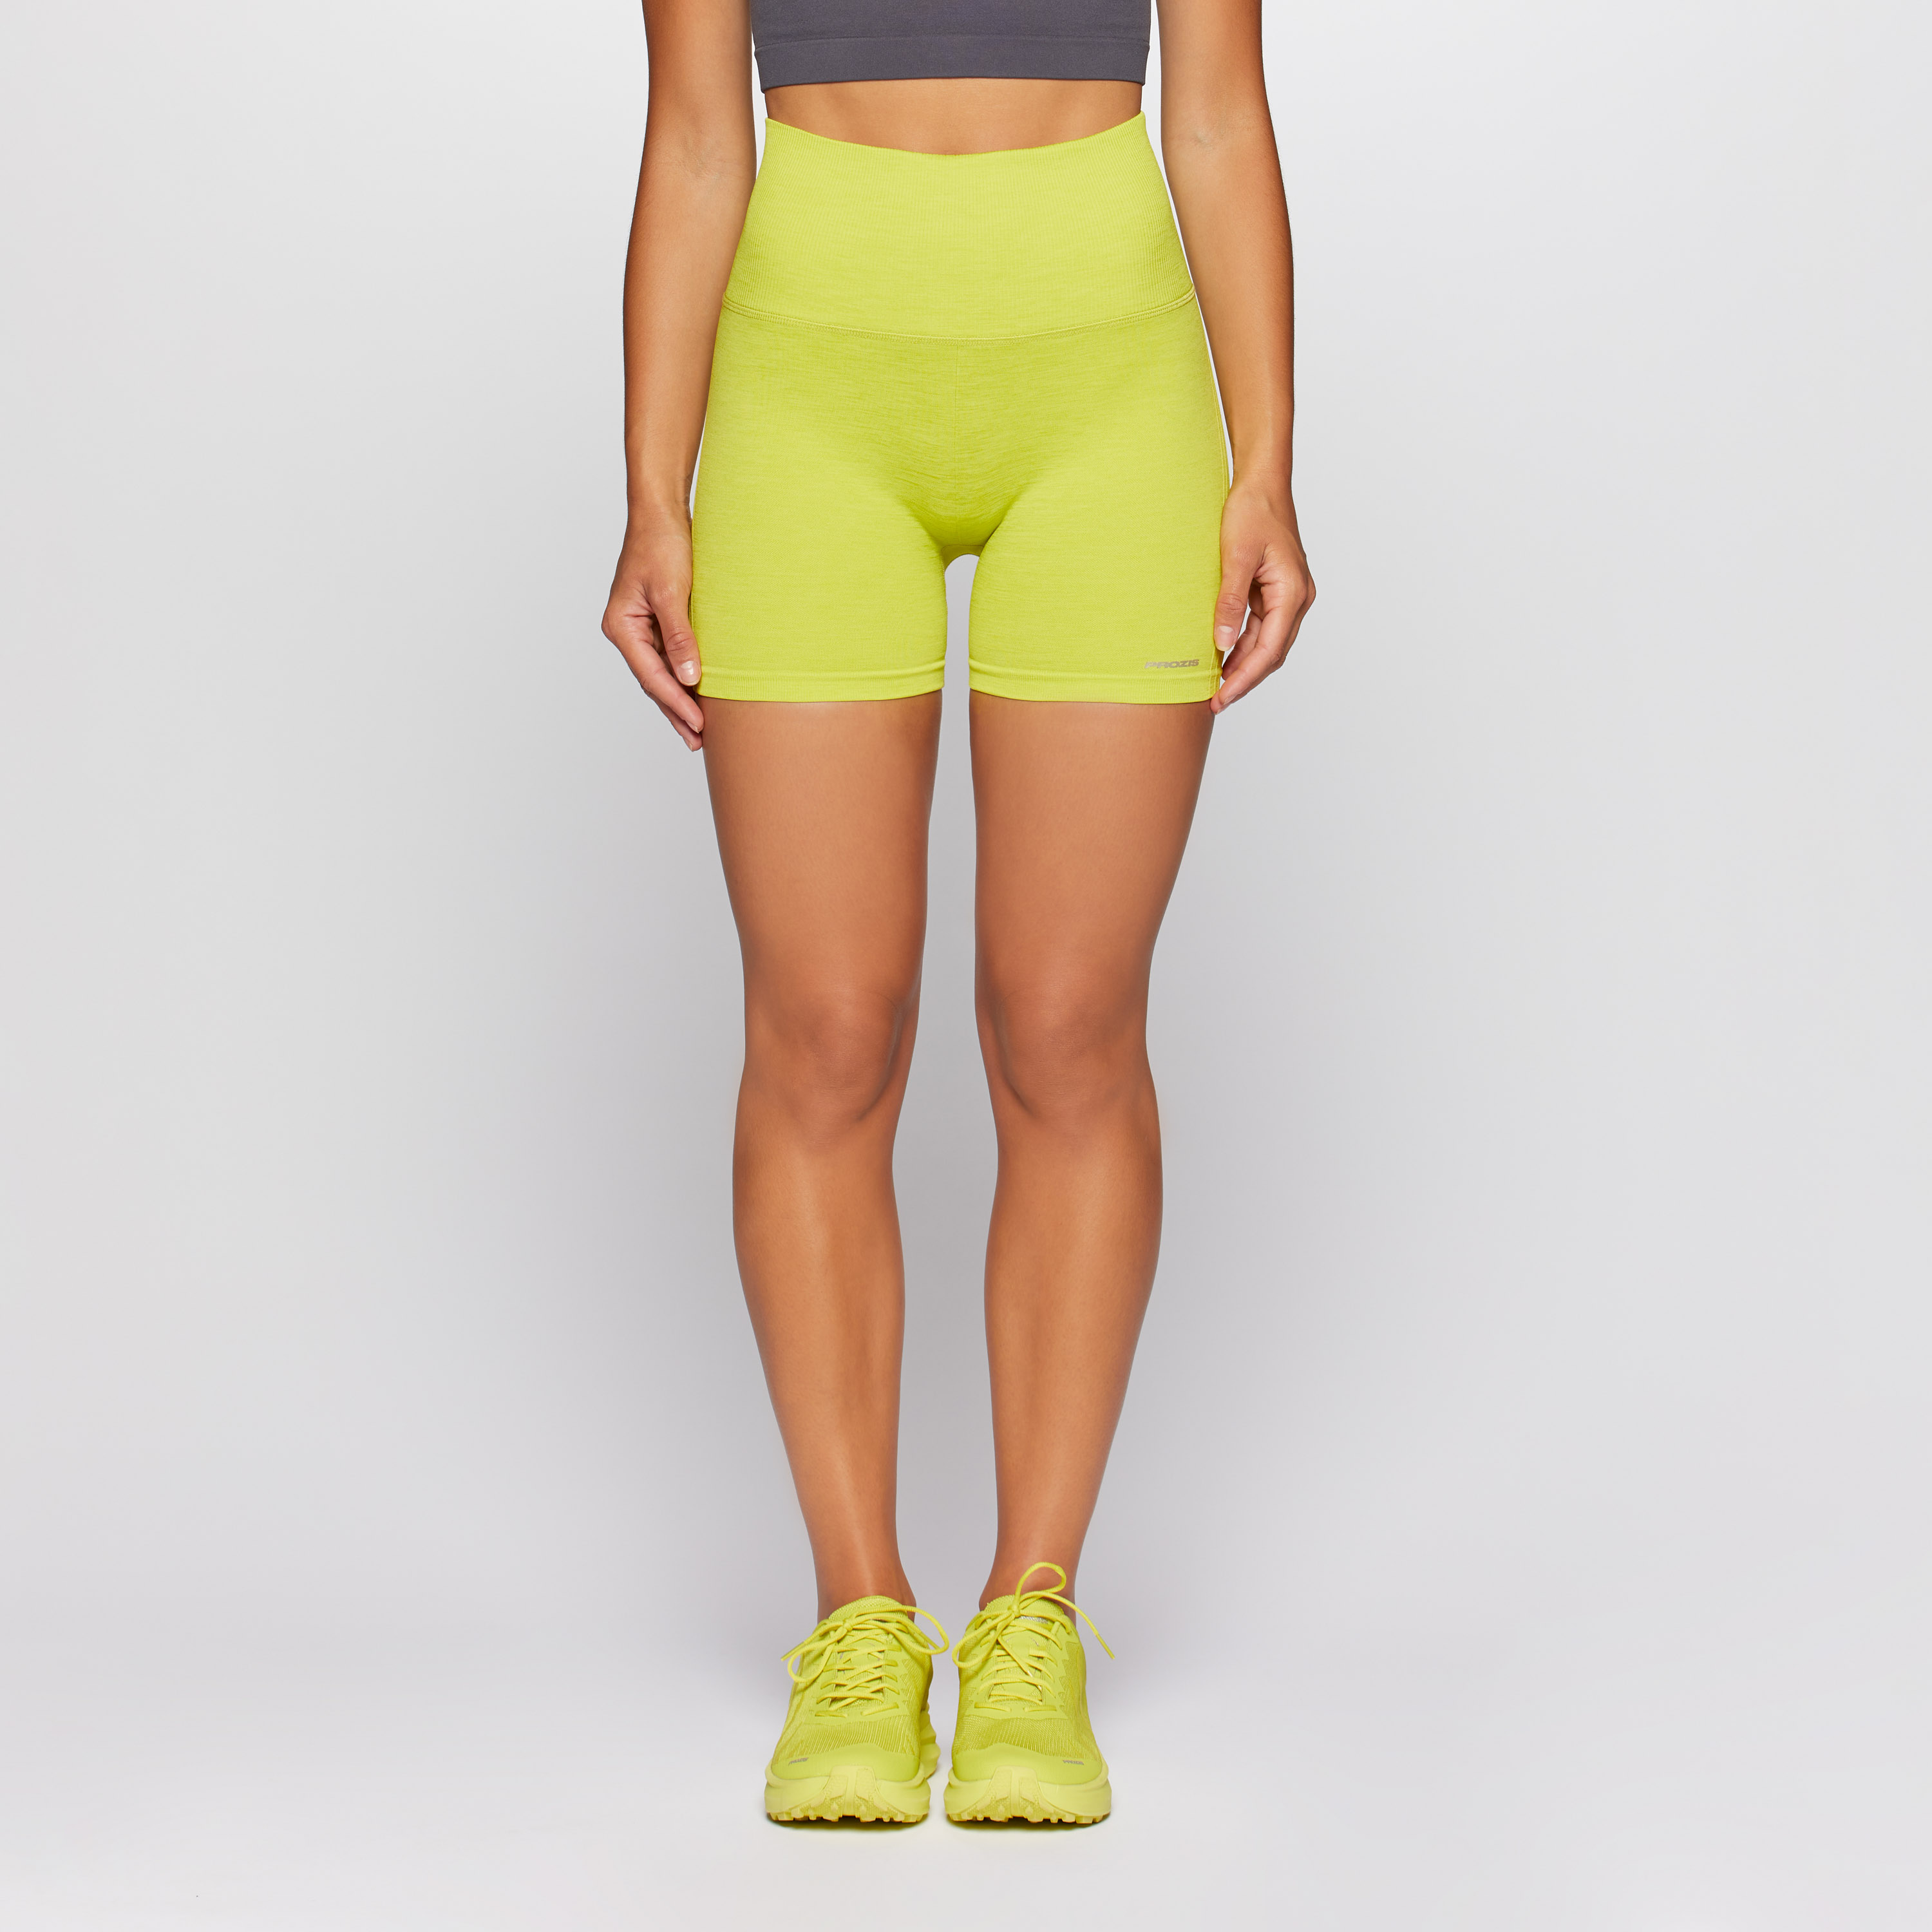 neon green high waisted shorts